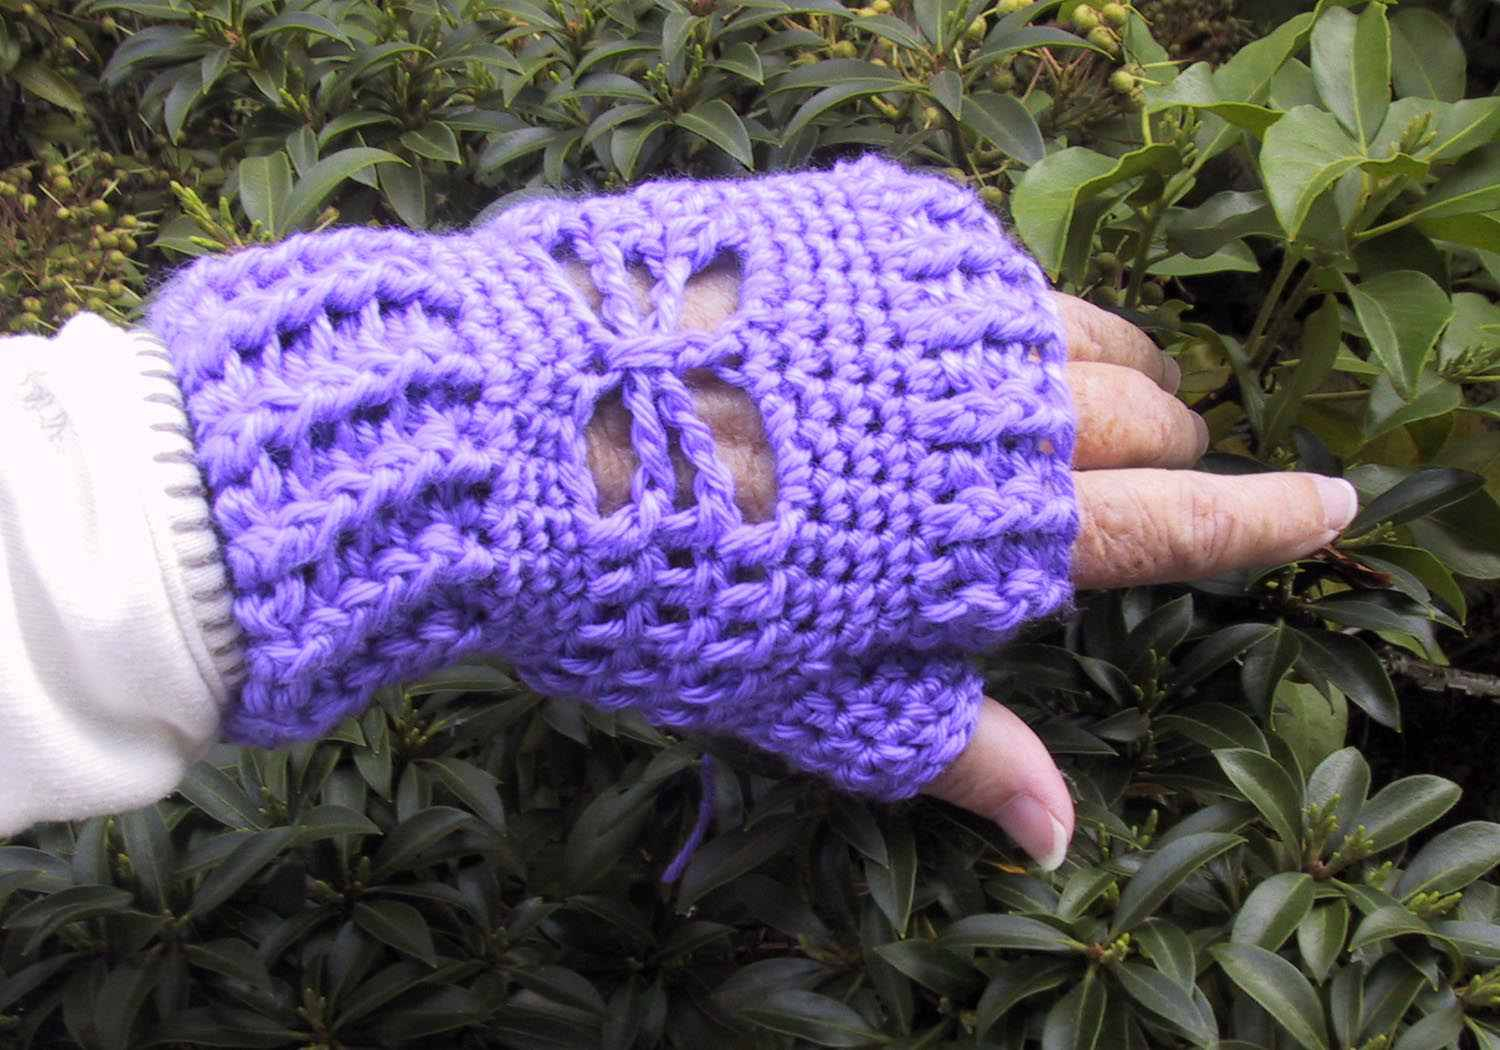 Crochet Gloves Pattern With Fingers 10 Free Crochet Fingerless Gloves Patterns